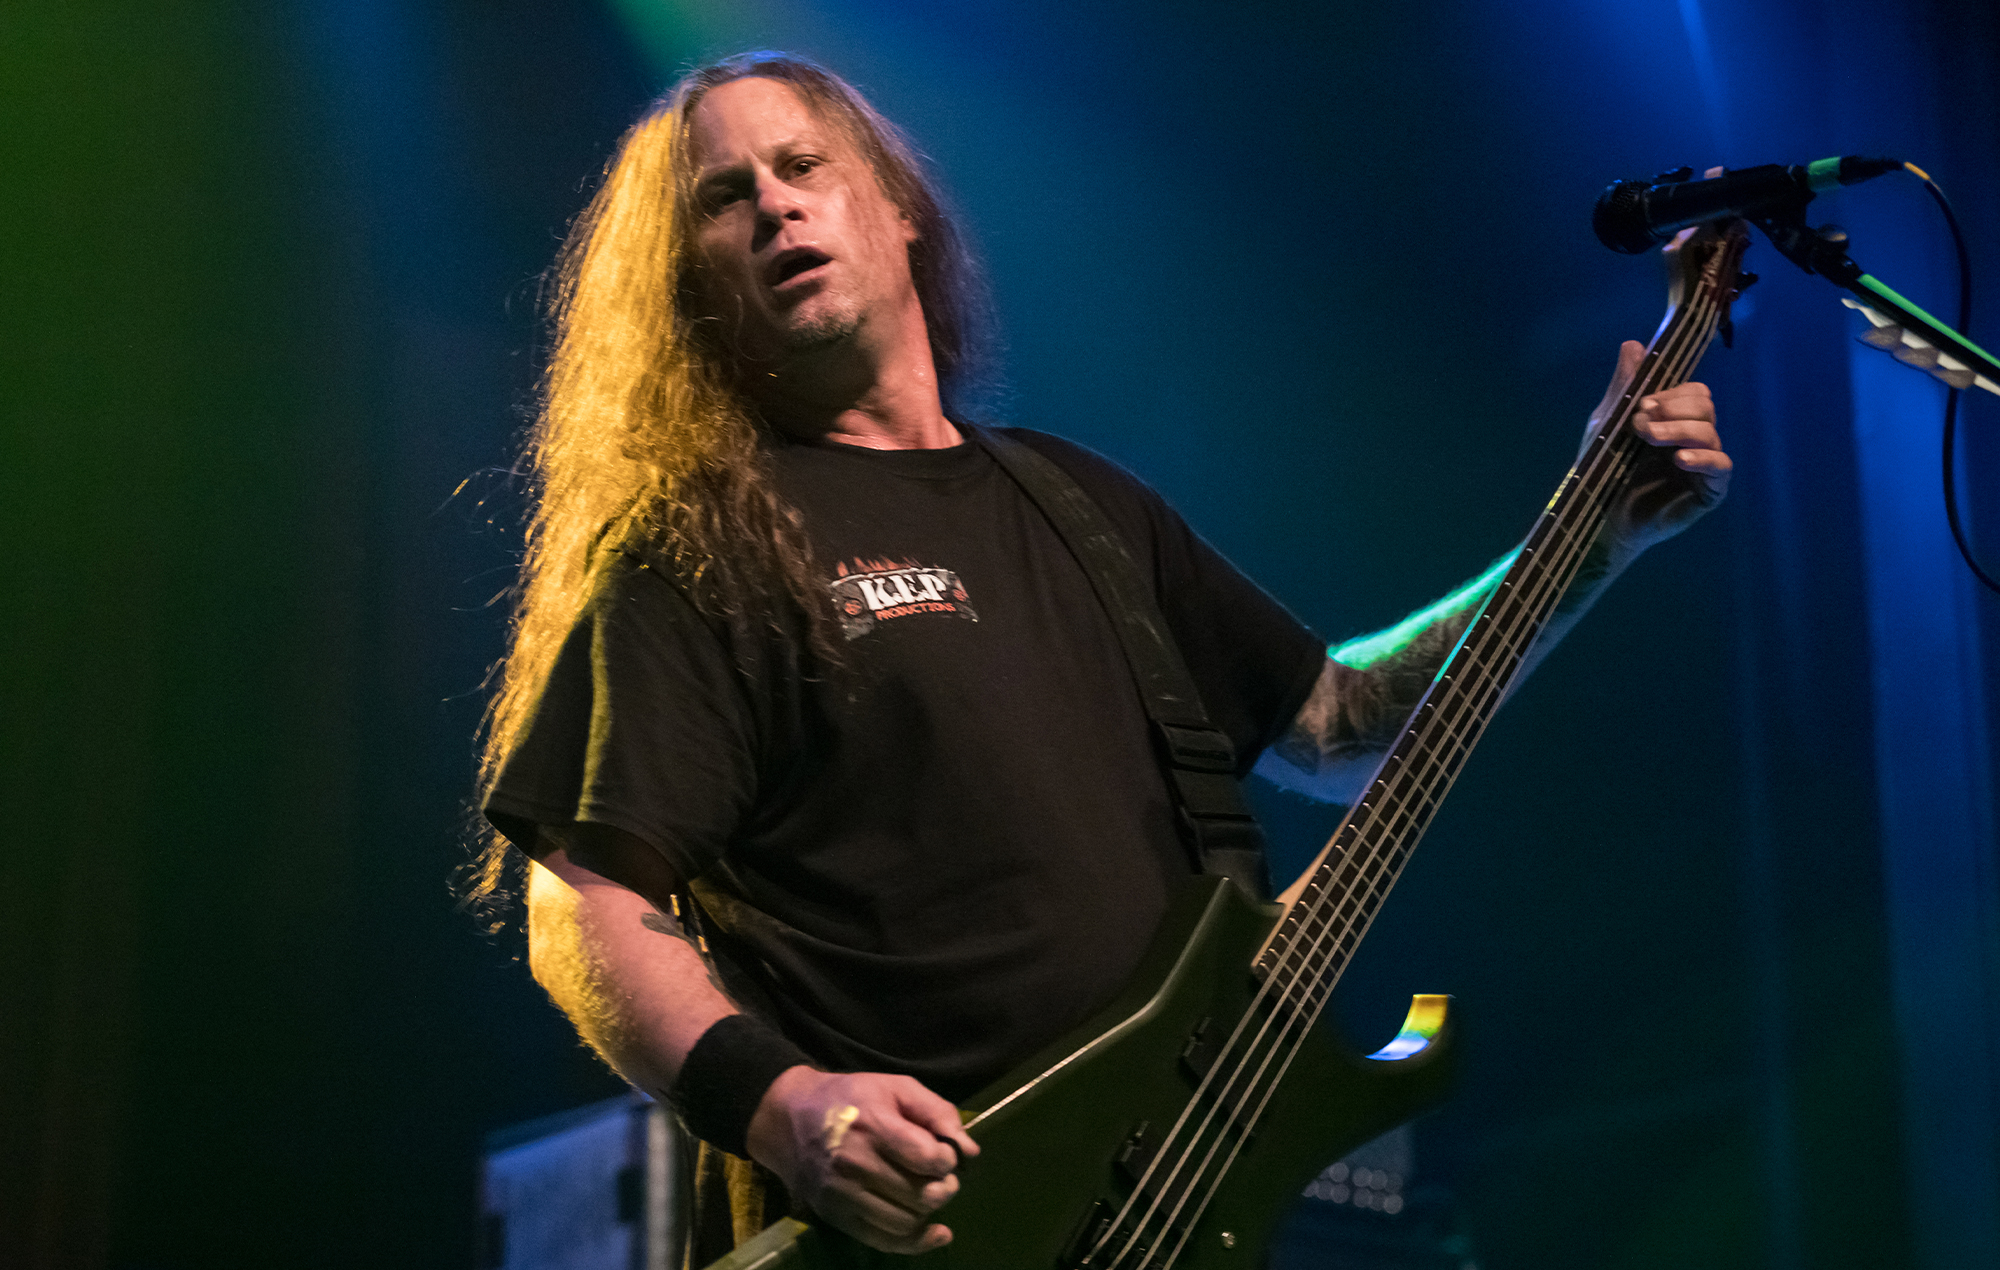 Steve Tucker of Morbid Angel. Credit: Miikka Skaffari via Getty Images